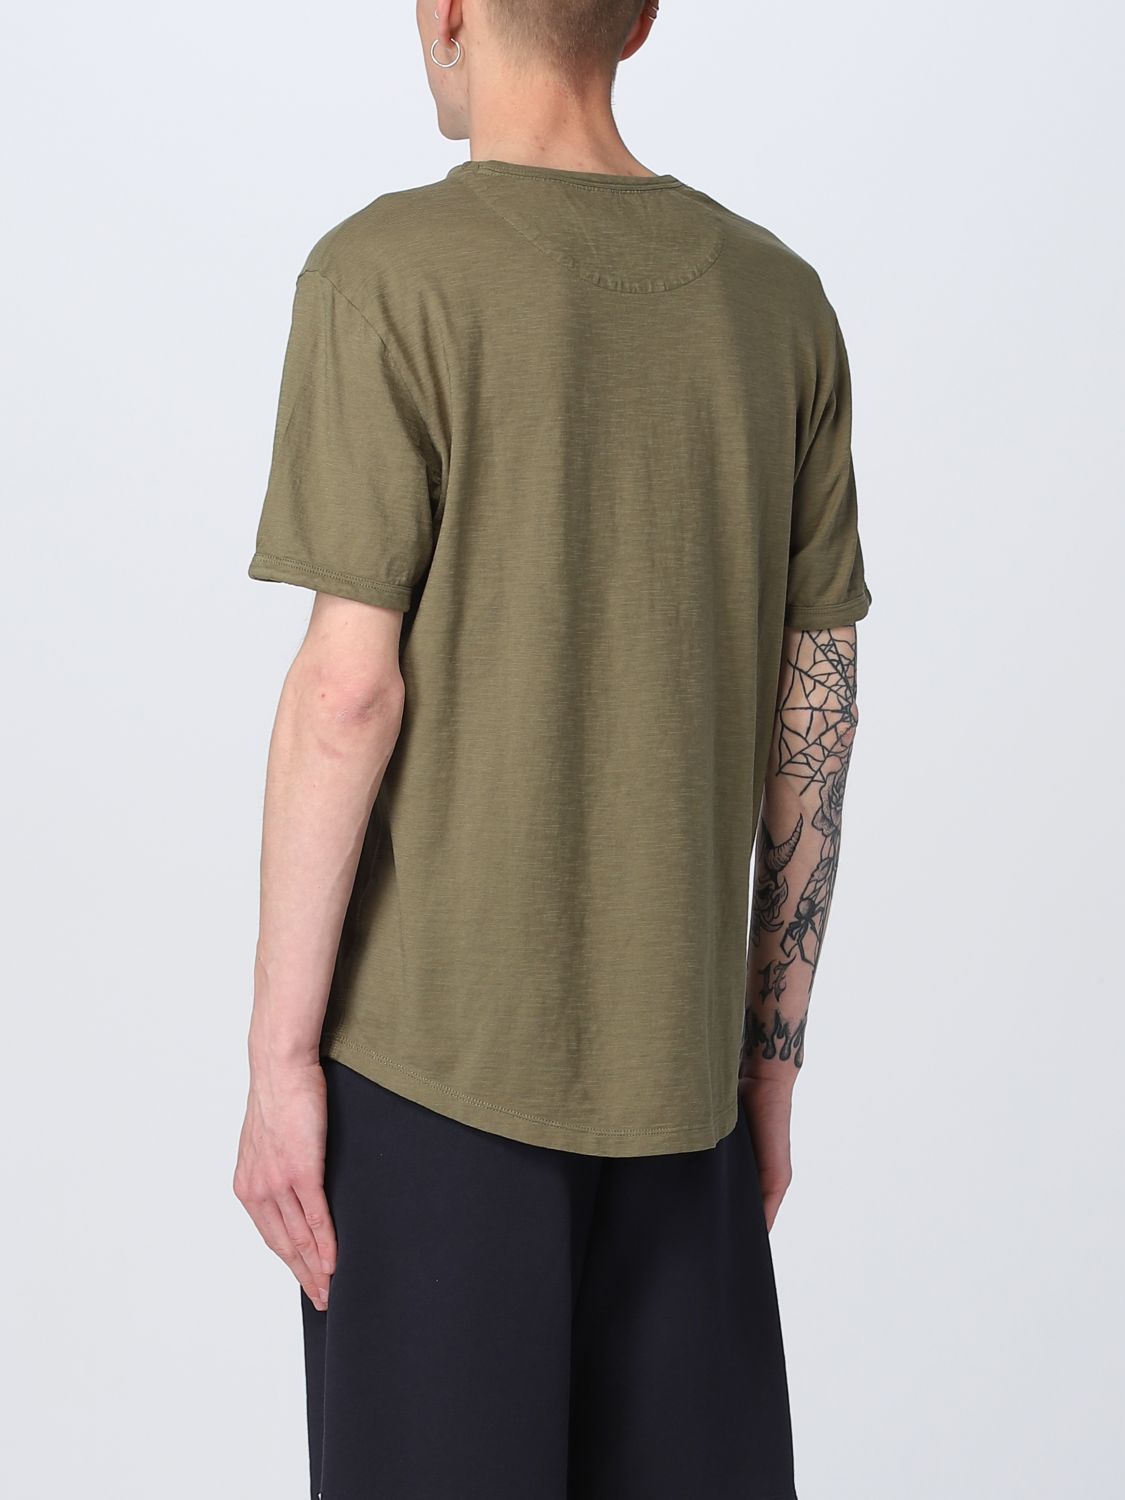 SUN 68: t-shirt for man - Military | Sun 68 t-shirt T33115 online on ...